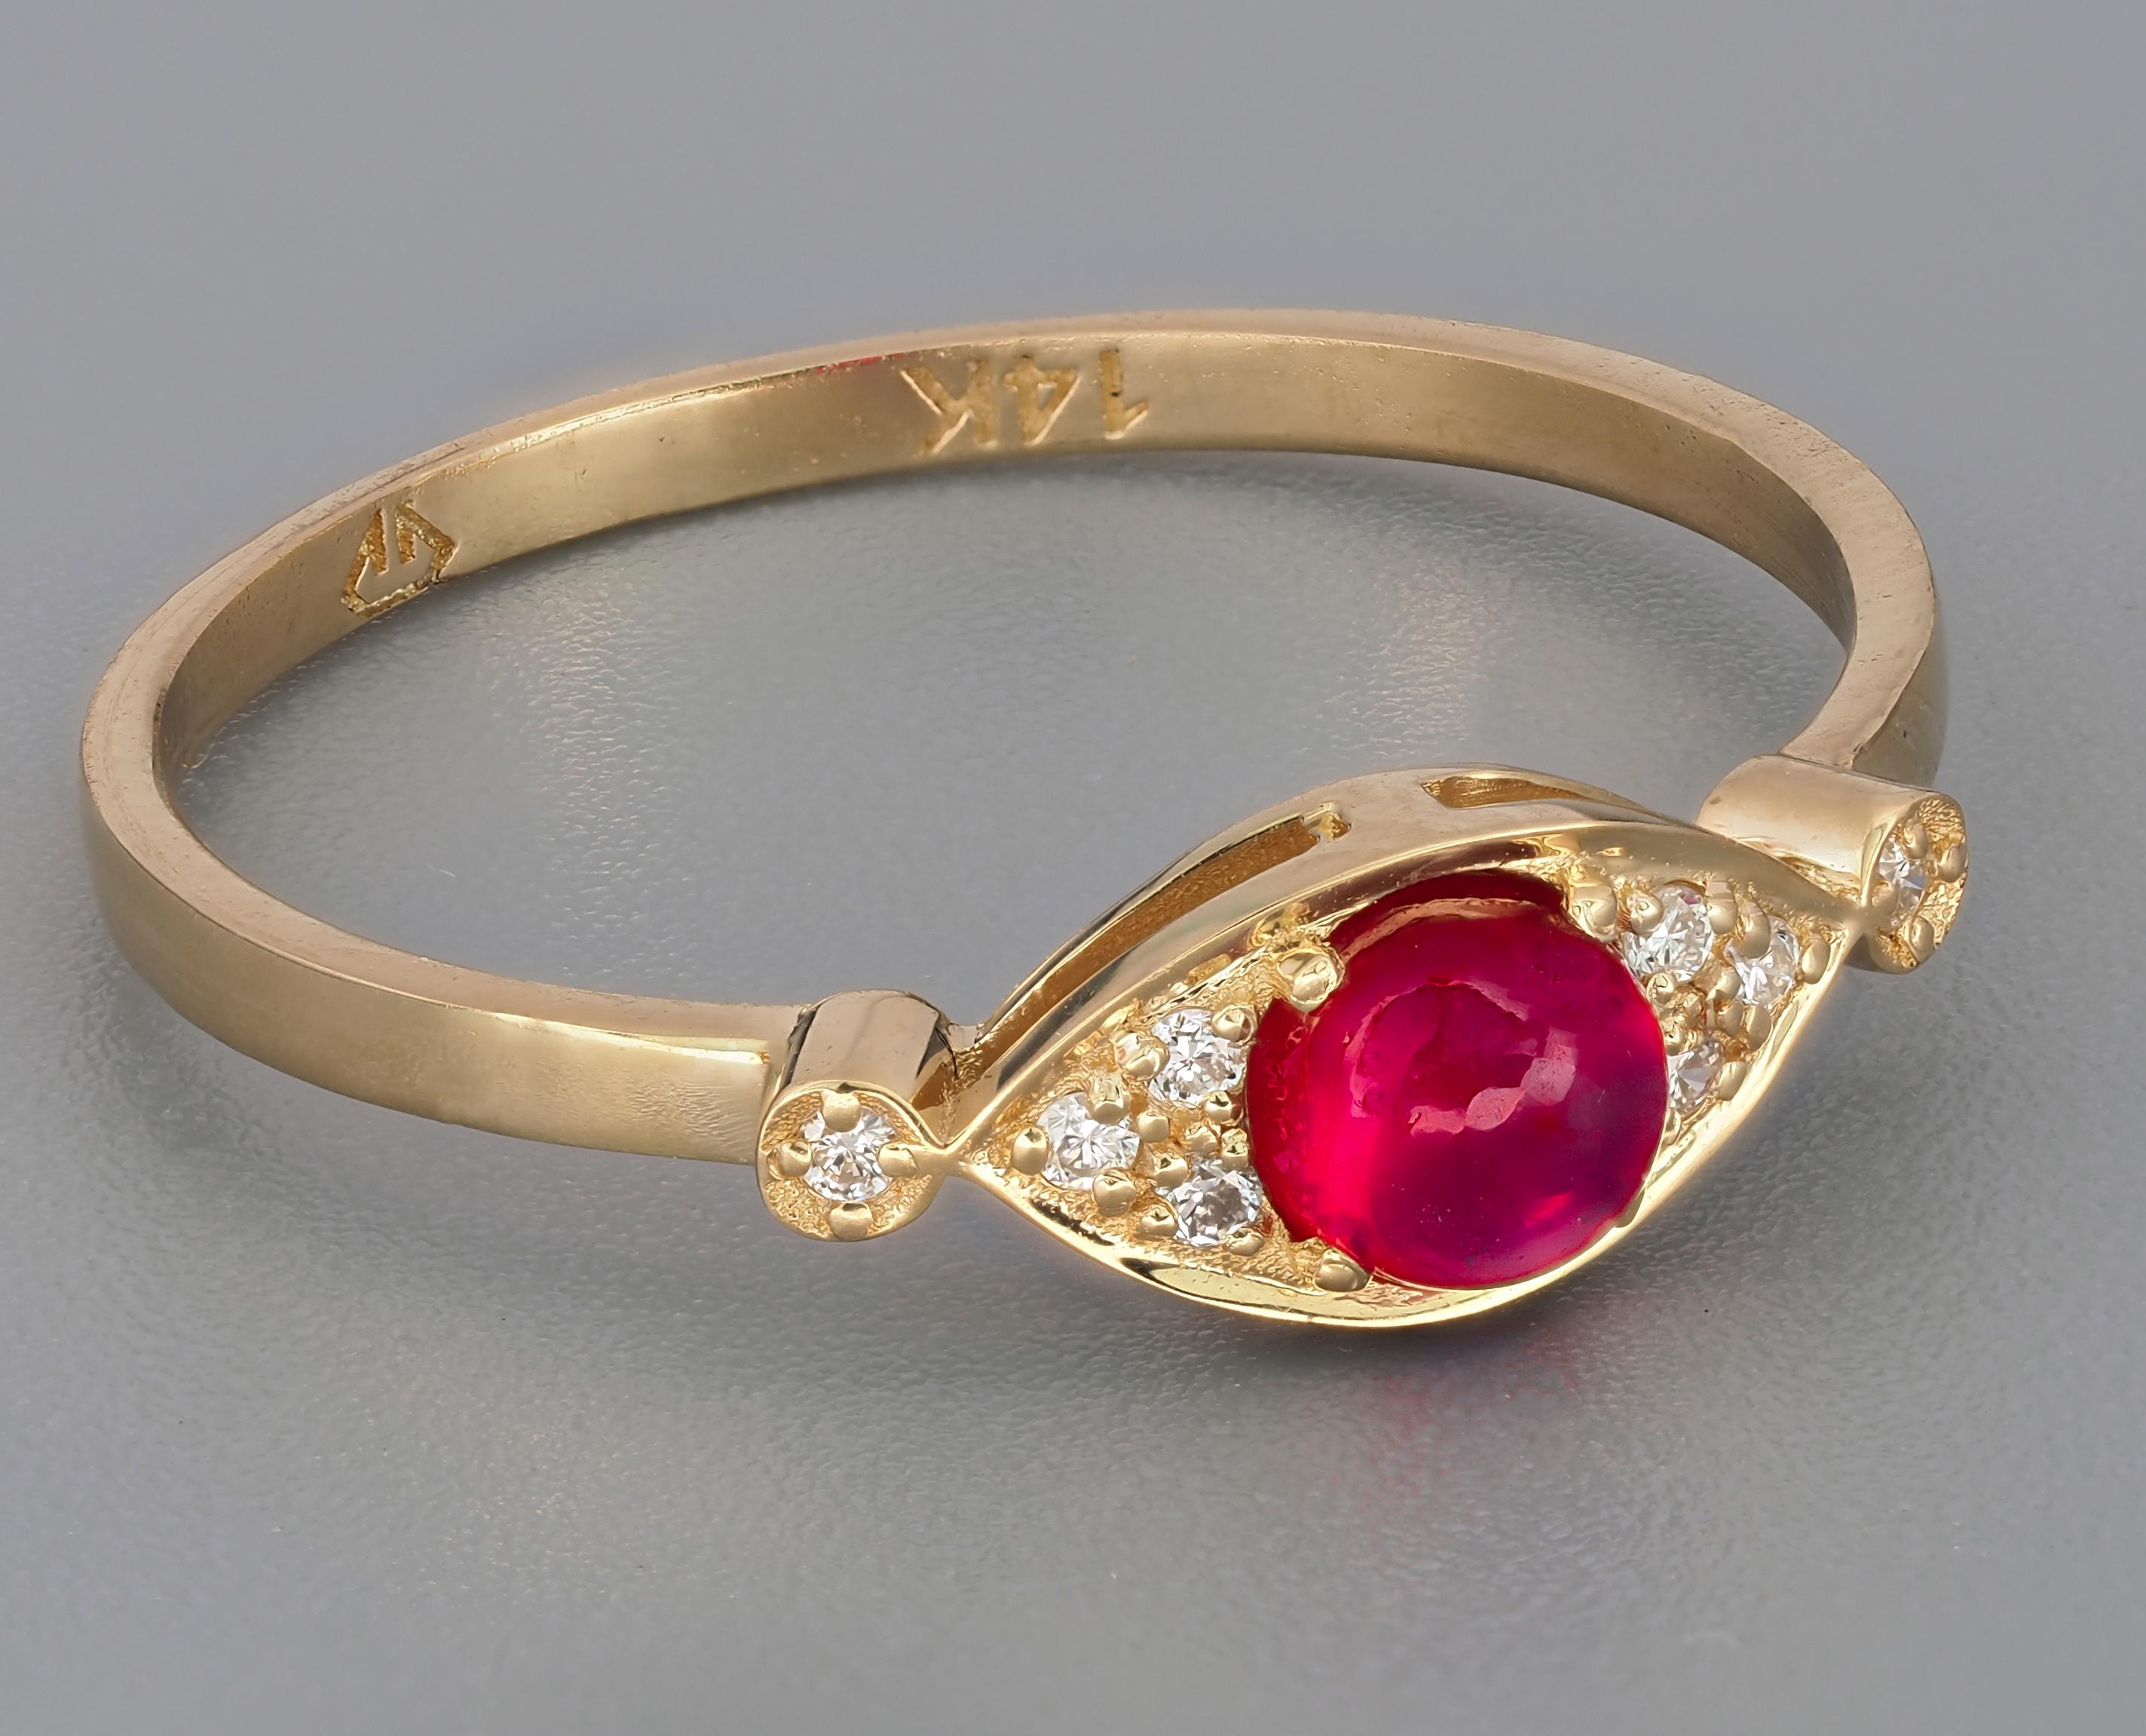 For Sale:  Ruby 14 karat ring.  Evil Eye Ring. July birthstone ruby ring 7